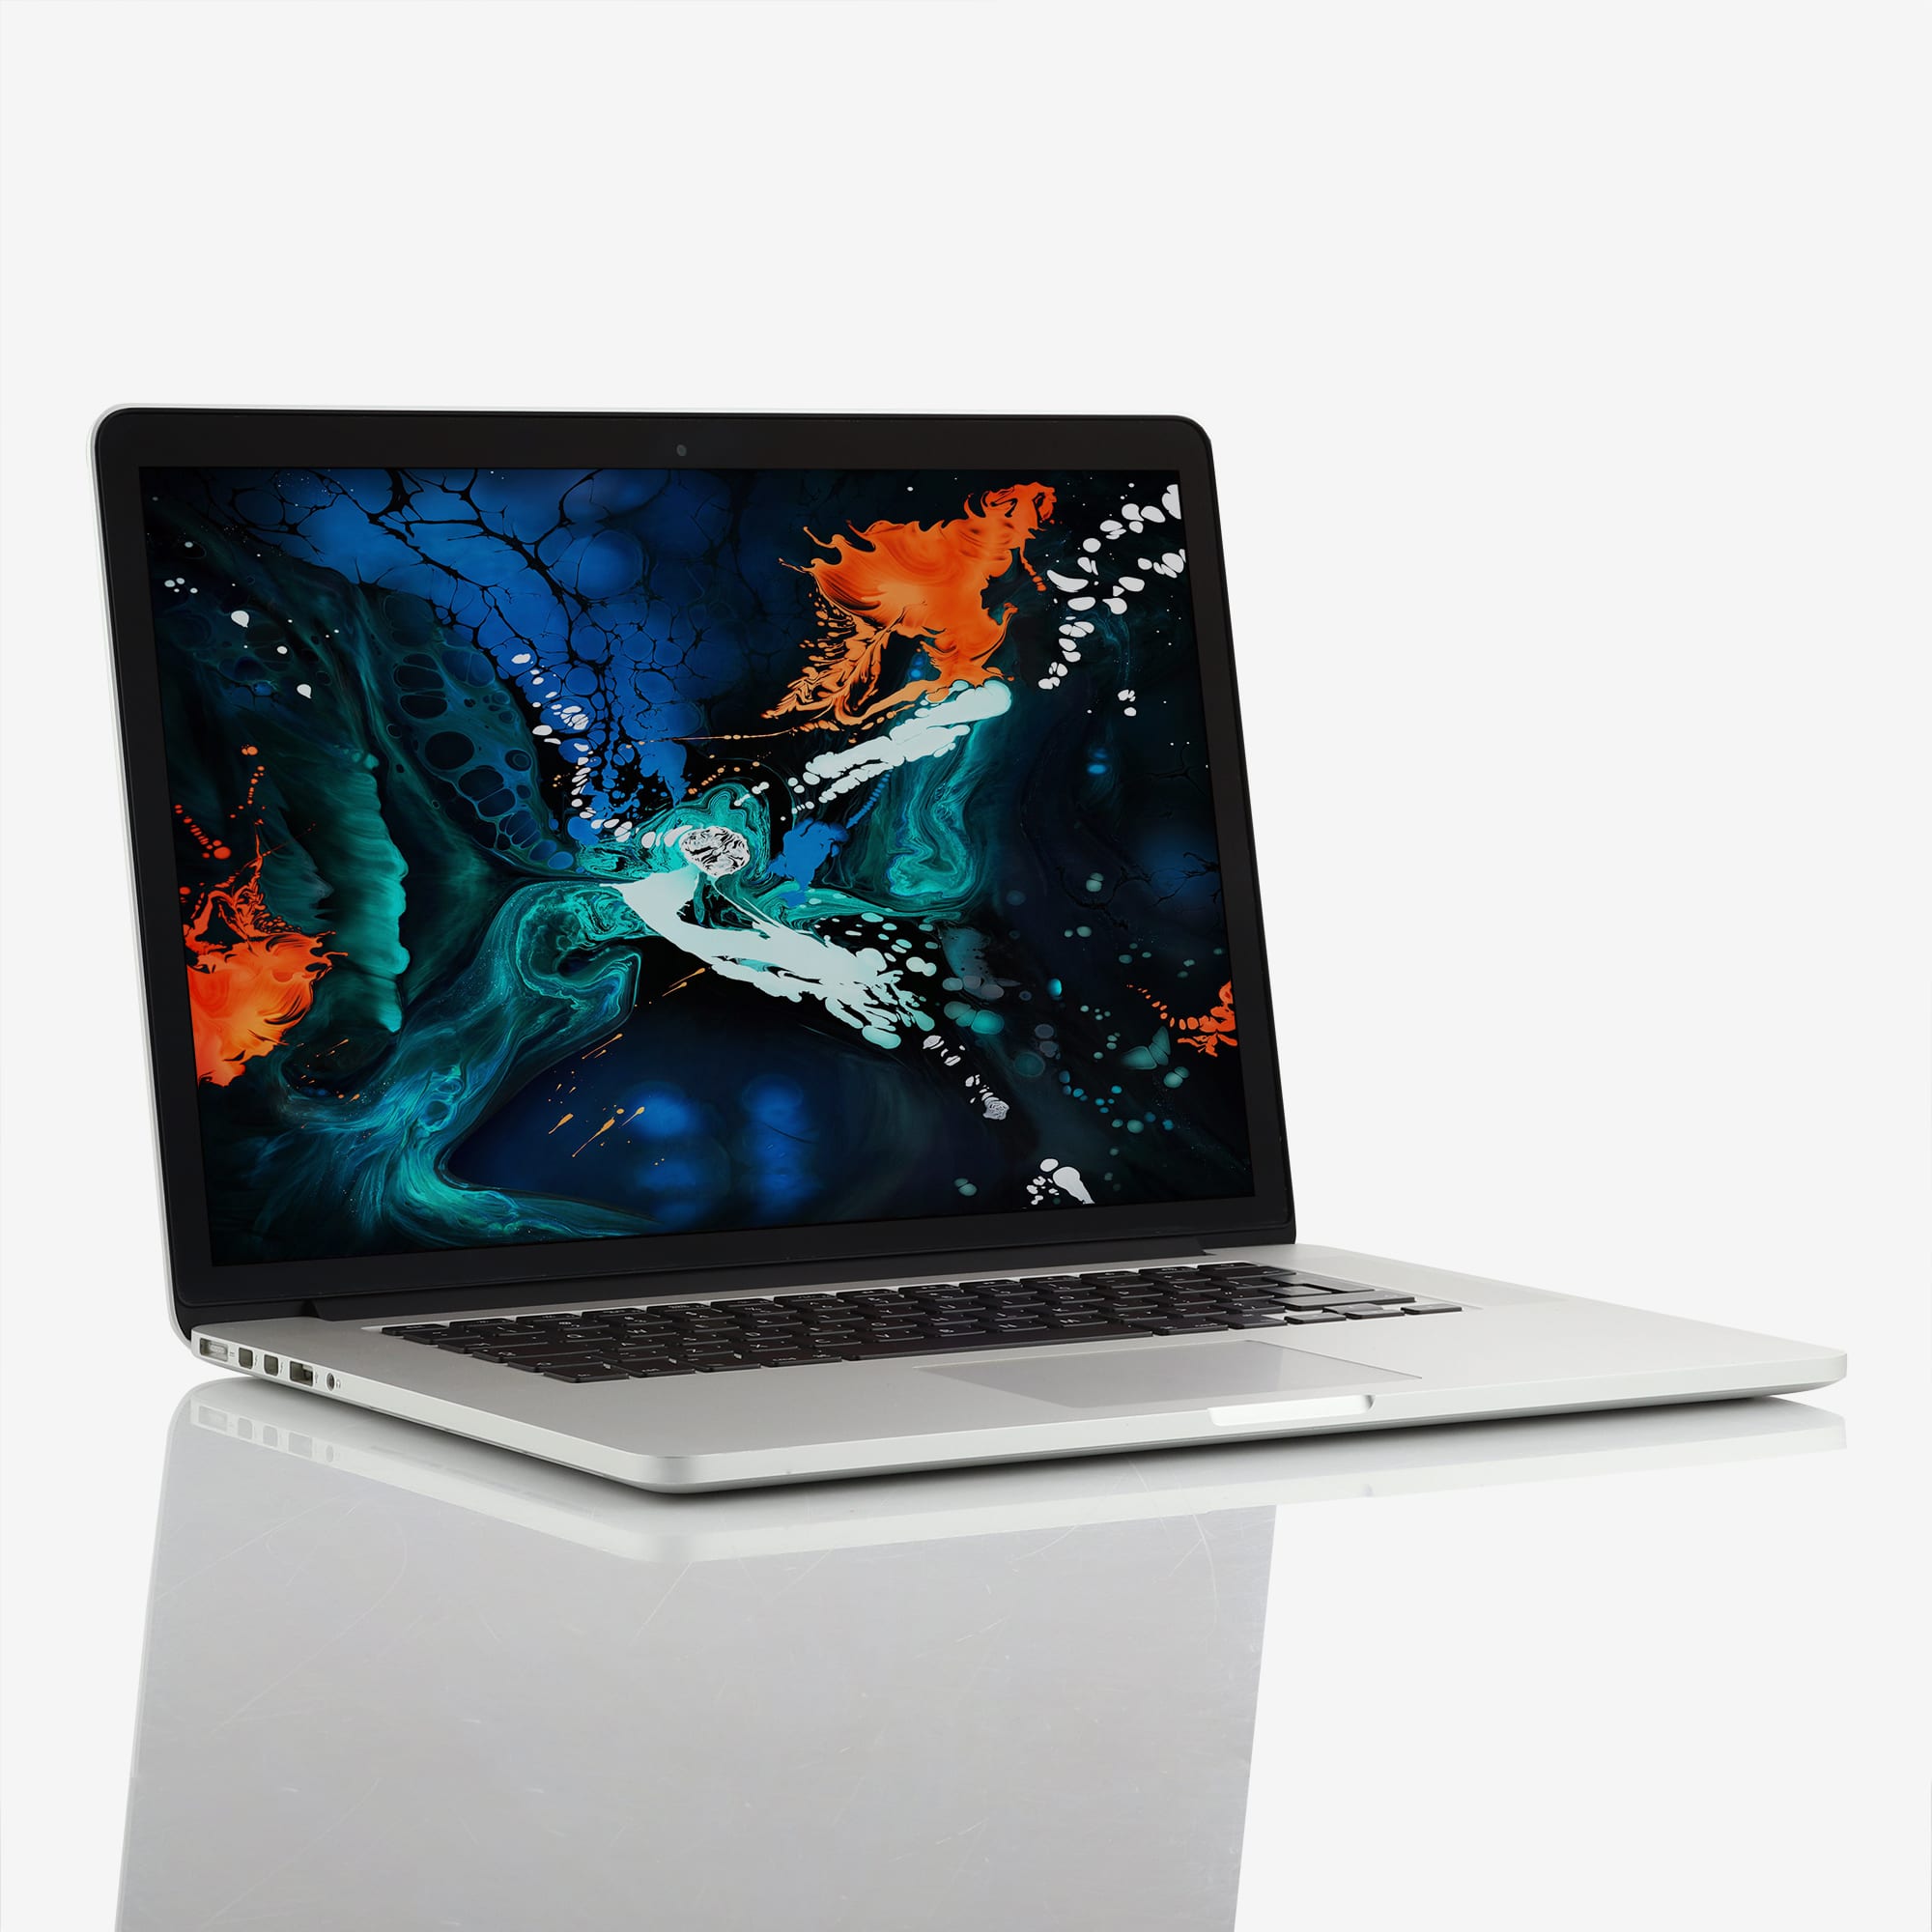 1 x Apple MacBook Pro Retina 15 Inch Intel Core i7 2.40 GHz (2013)